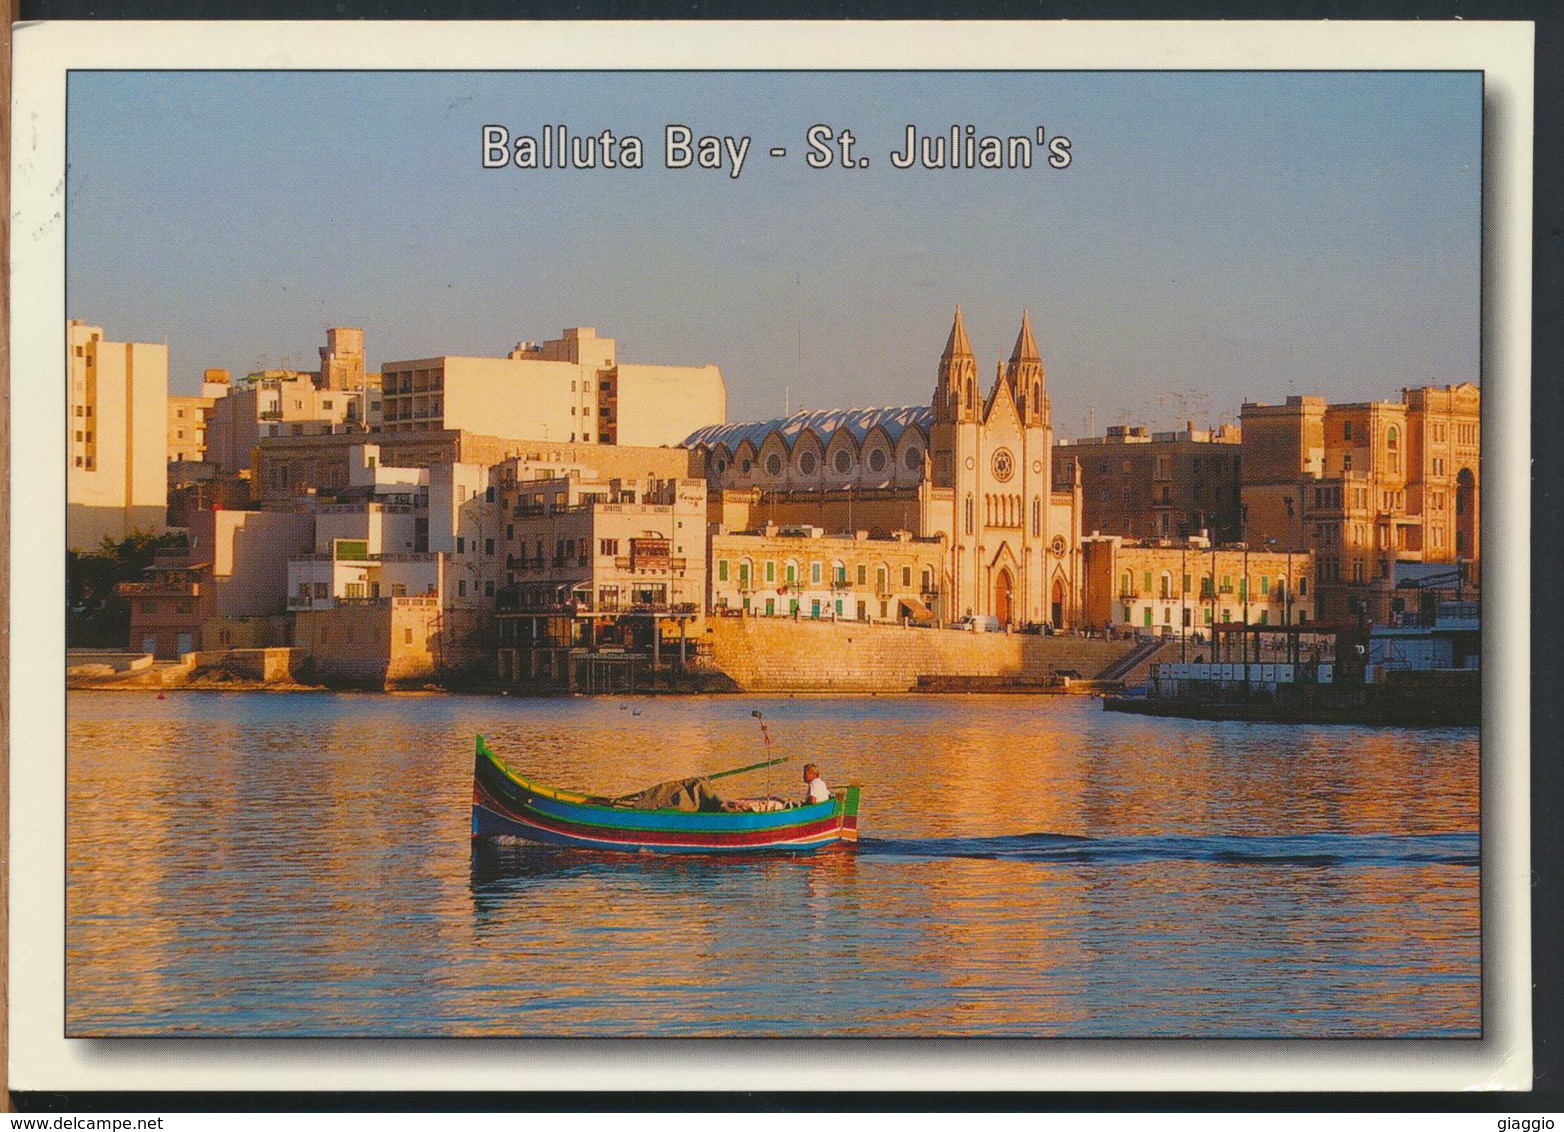 °°° 11403 - MALTA - ST. JULIAN'S - BALLUTA BAY - 2004 With Stamps °°° - Malta